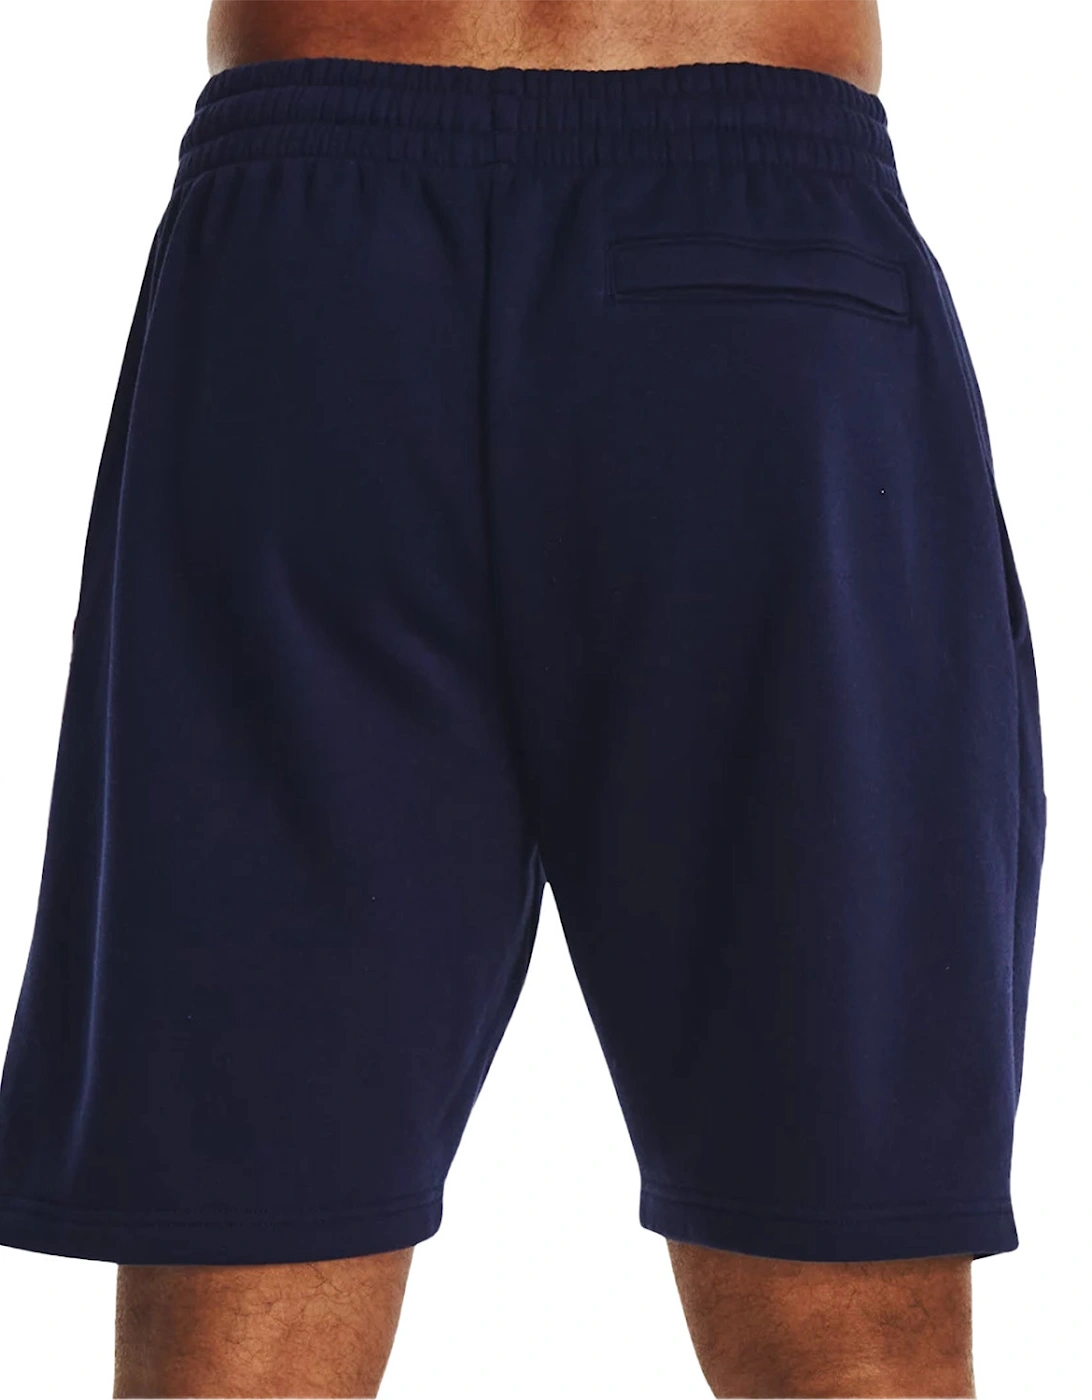 Mens Rival Fleece Shorts (Navy)